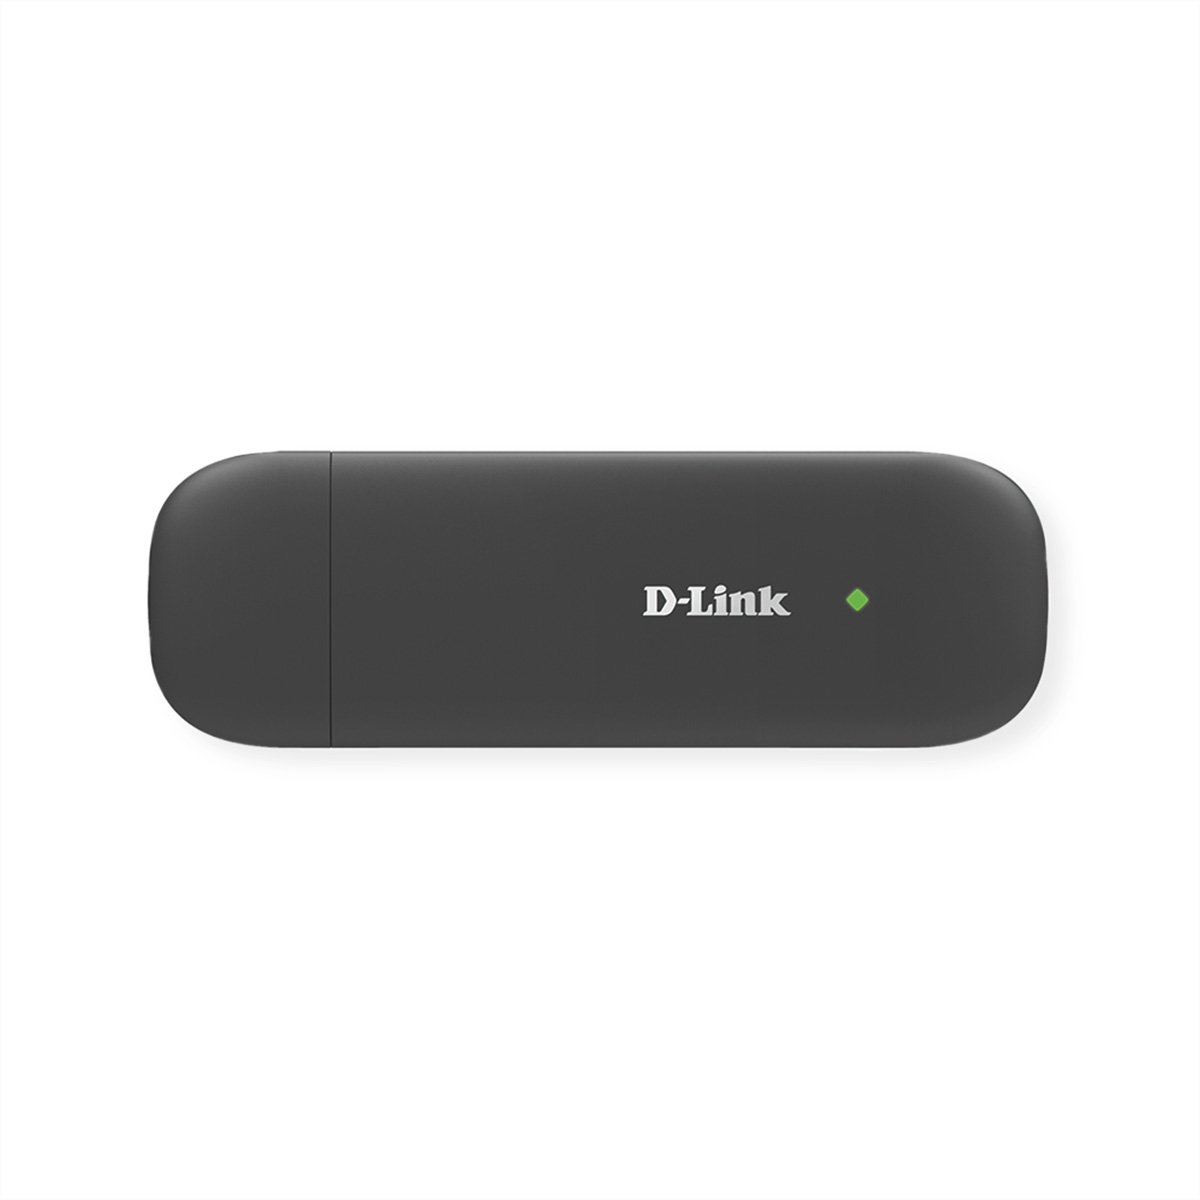 D-Link USB Adapter DWM-222/R, 150MBit LTE USB Stick, LTE Cat.4